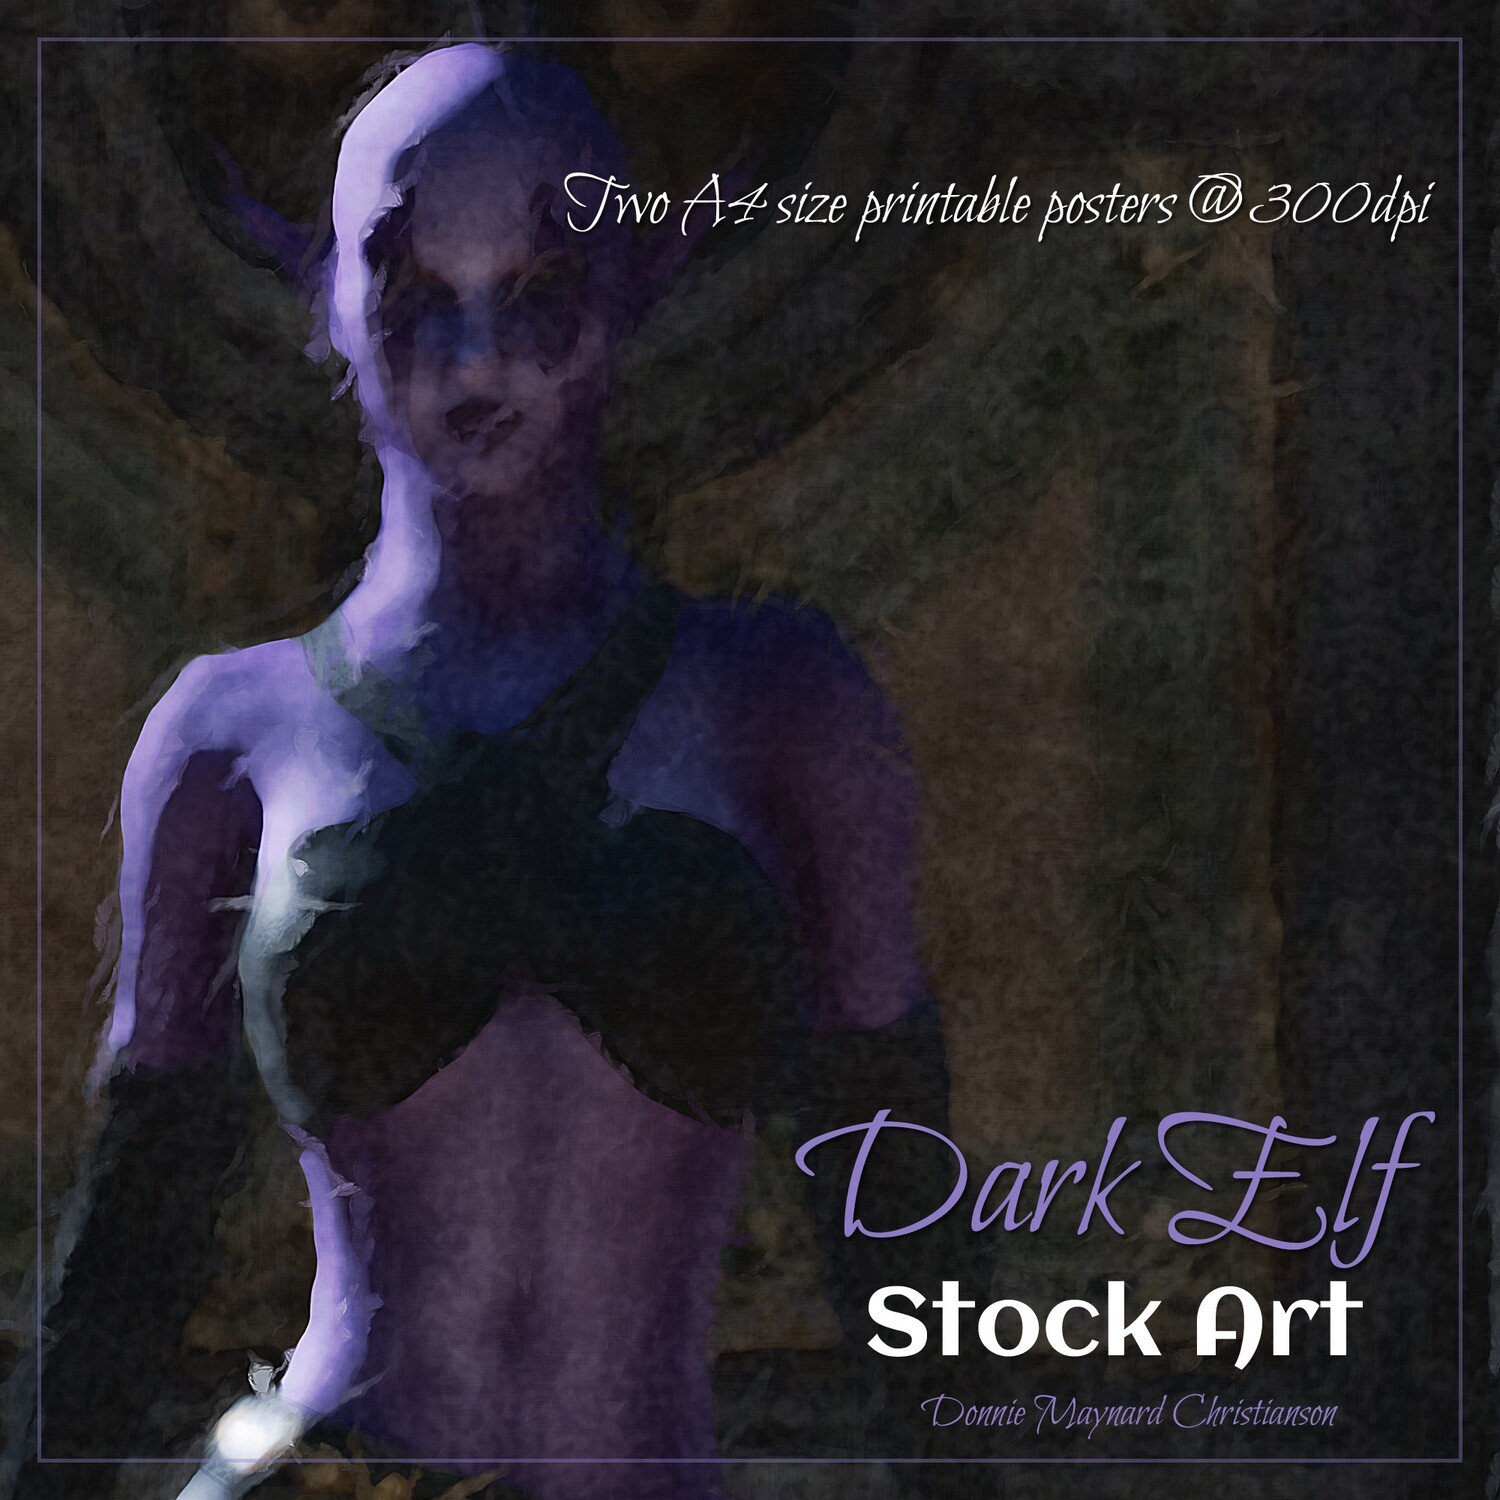 Dark Elf Stock Art